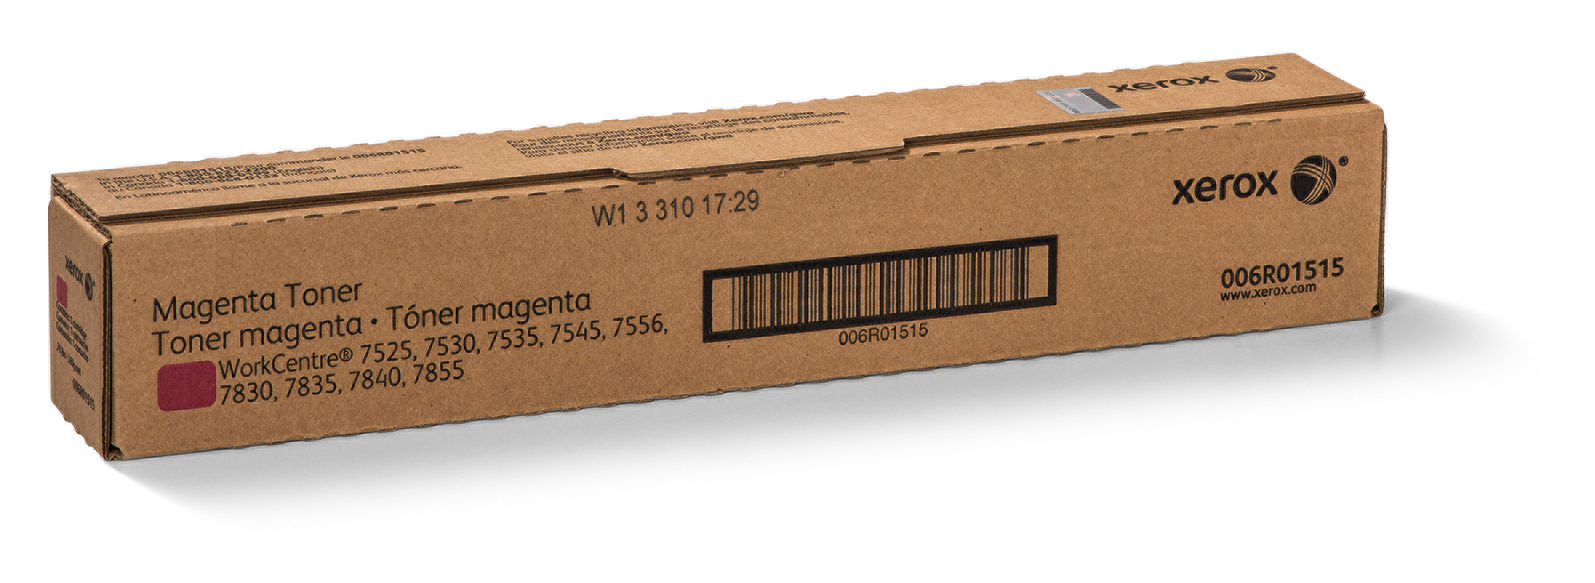 WorkCentre 7830/7835/7845/7855 MAGENTA Toner Cartridge (15,000 Pages)  006R01515 Genuine Xerox Supplies